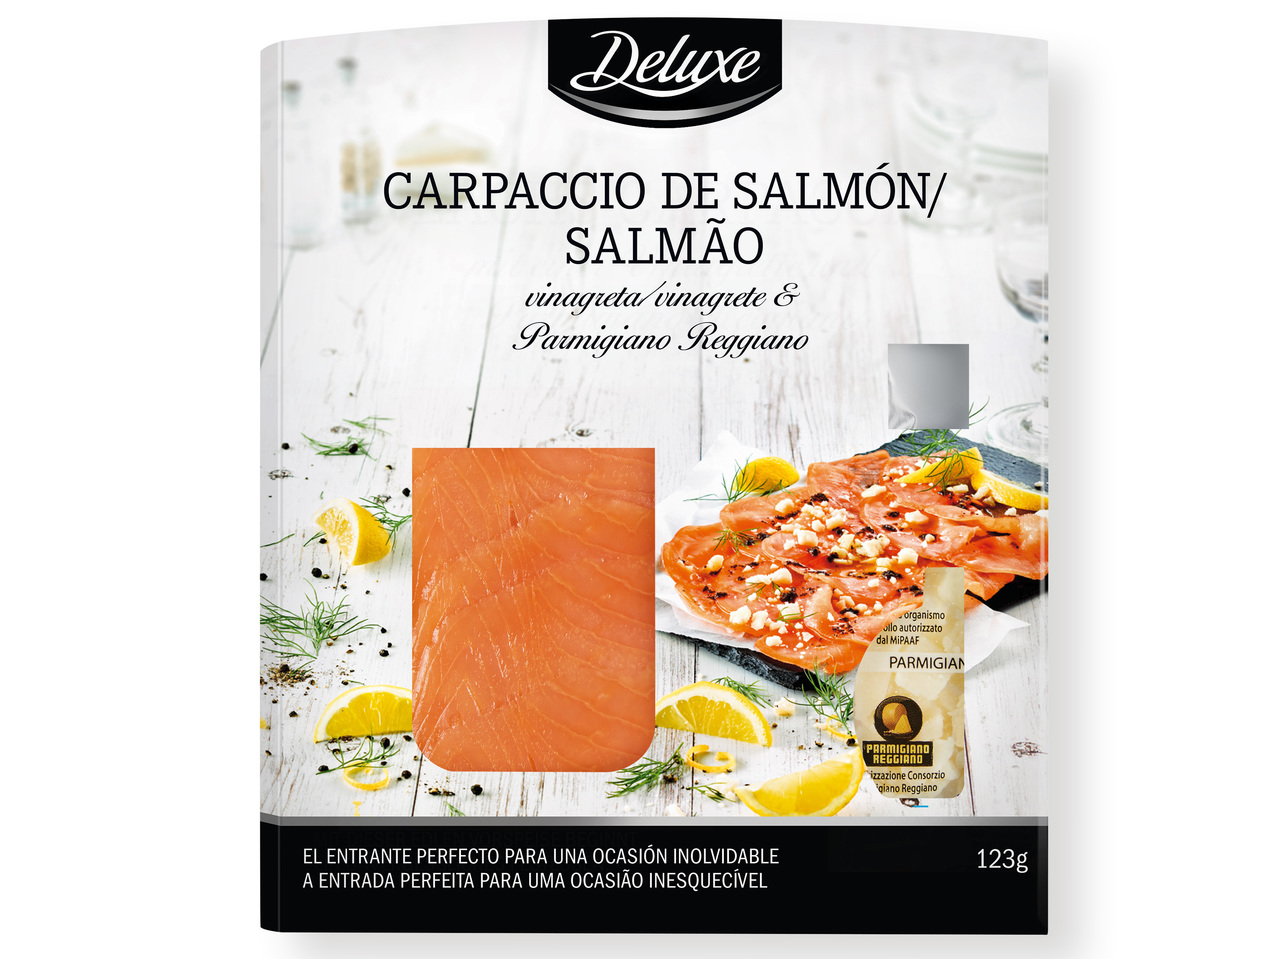 "Deluxe" Carpaccio de salmón